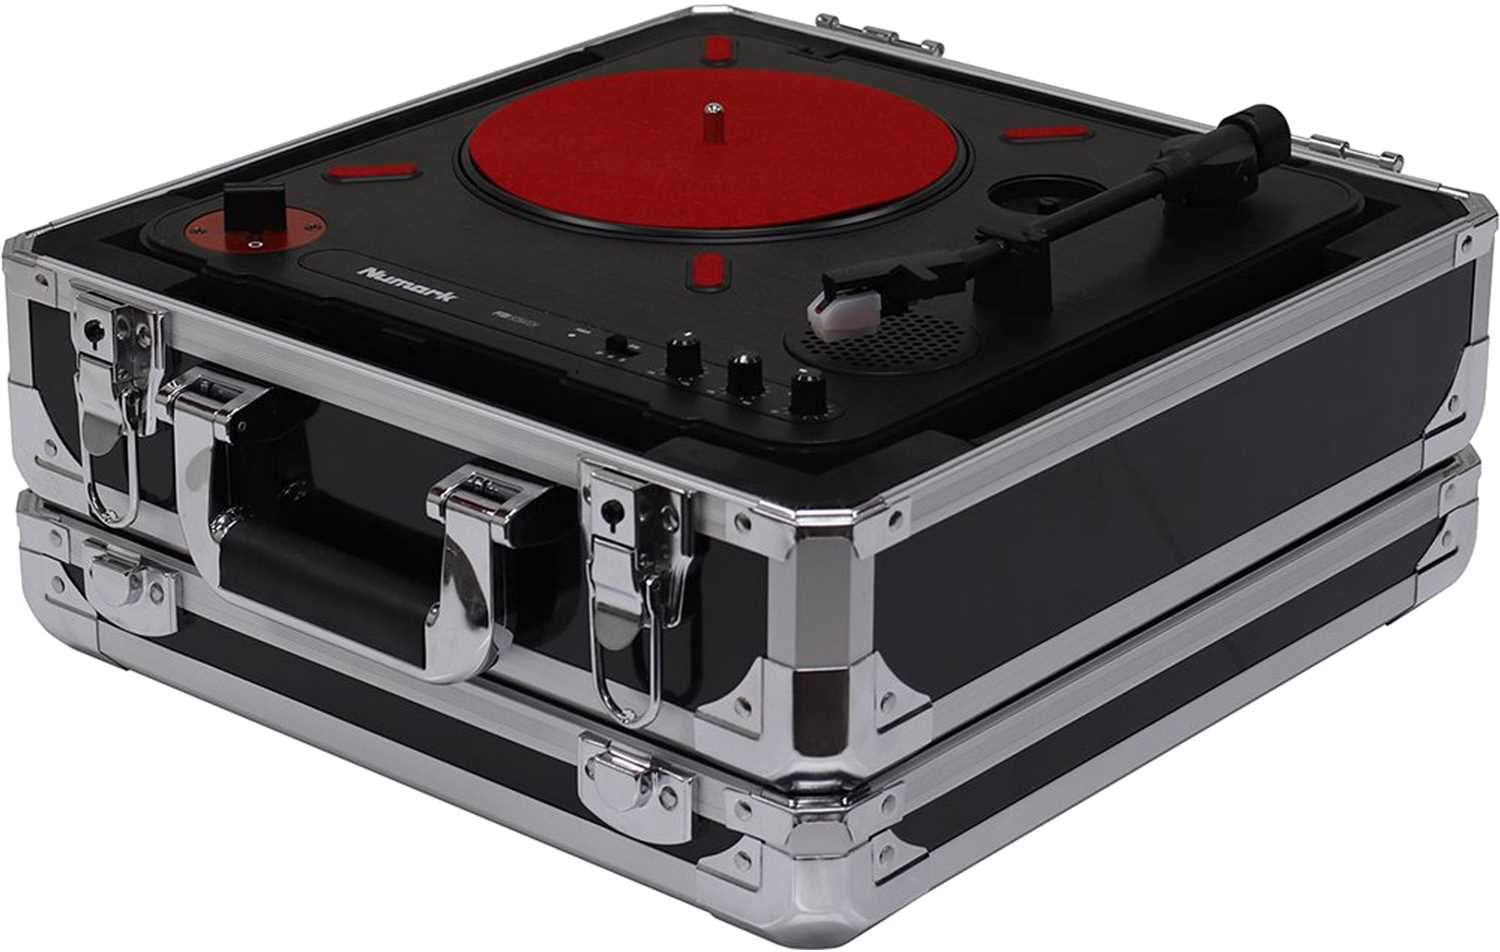 DJ-Tech Handy Kutz Portable DJ Mixer with Numark Portable Turntable & Case - ProSound and Stage Lighting